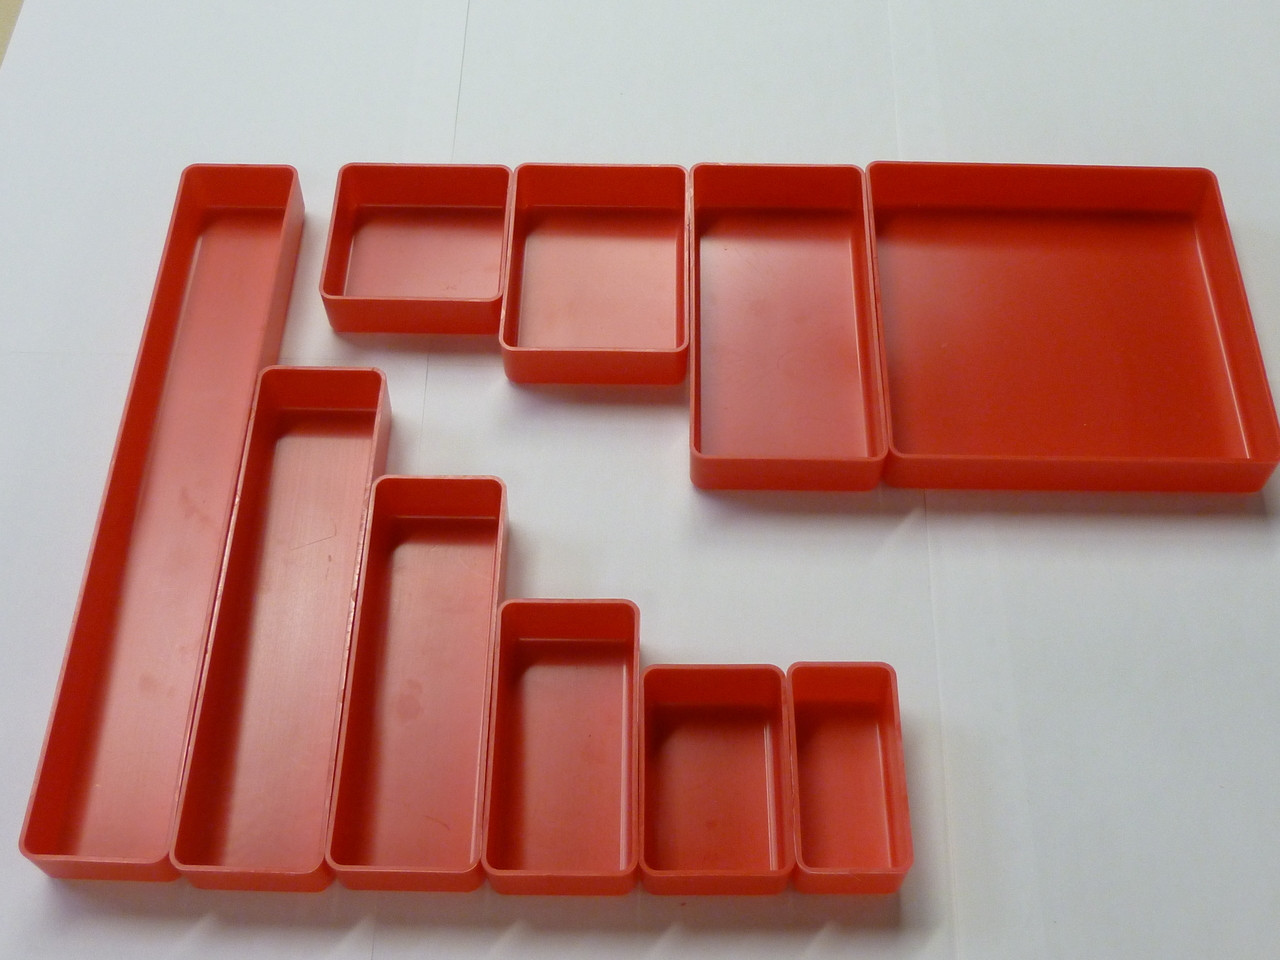 1 deep red plastic box assortment tool box organizer